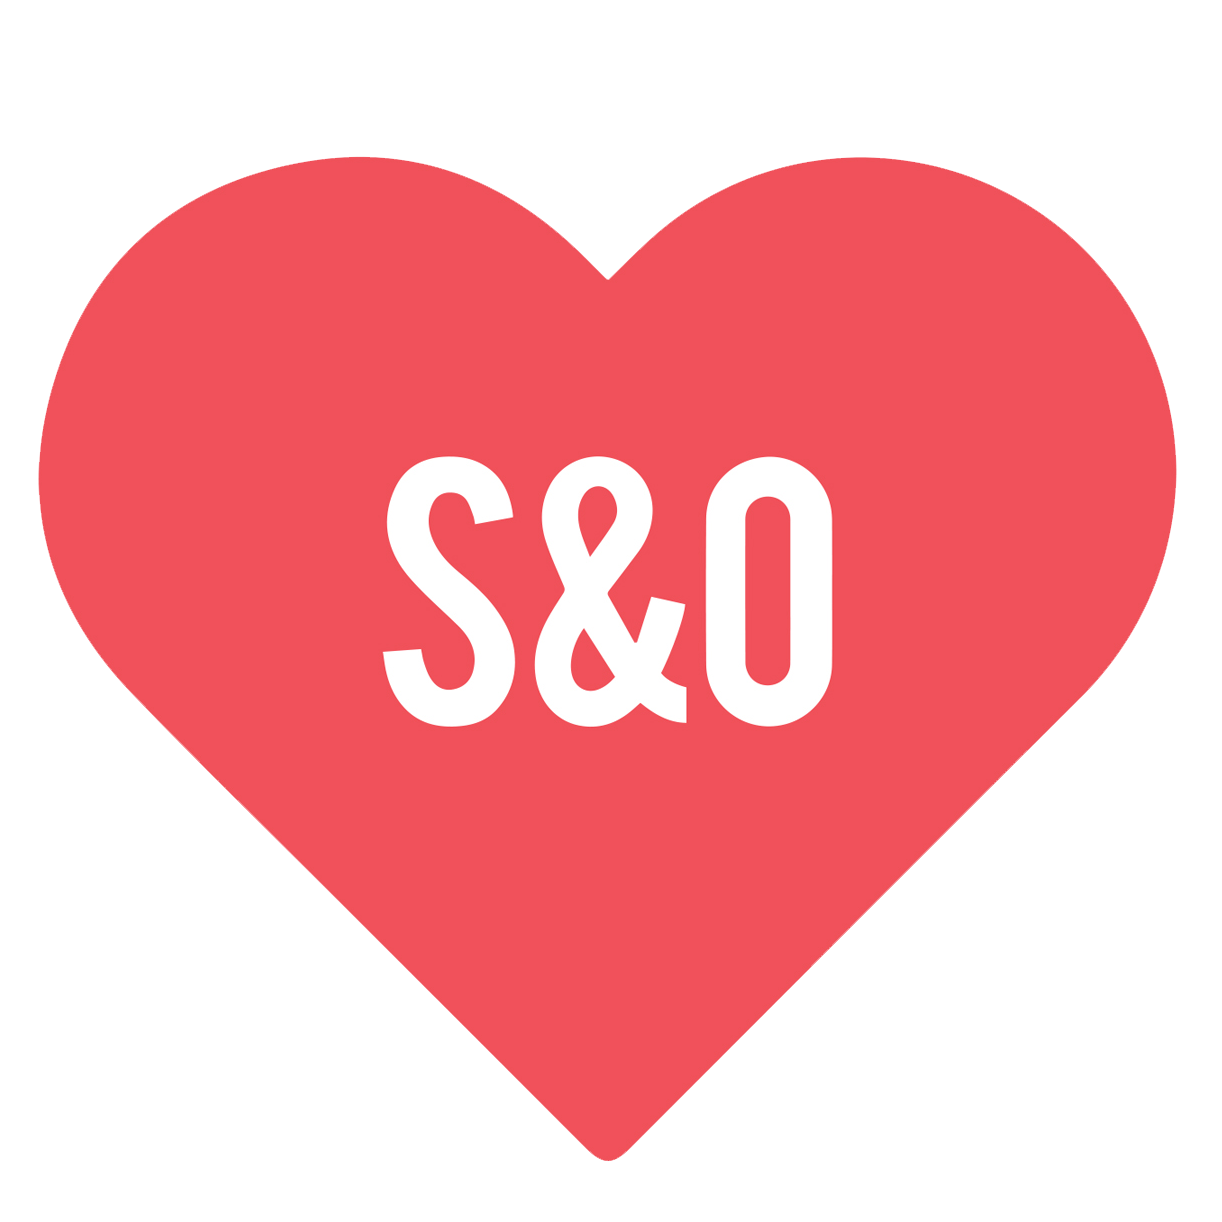 S&O logo inside a heart